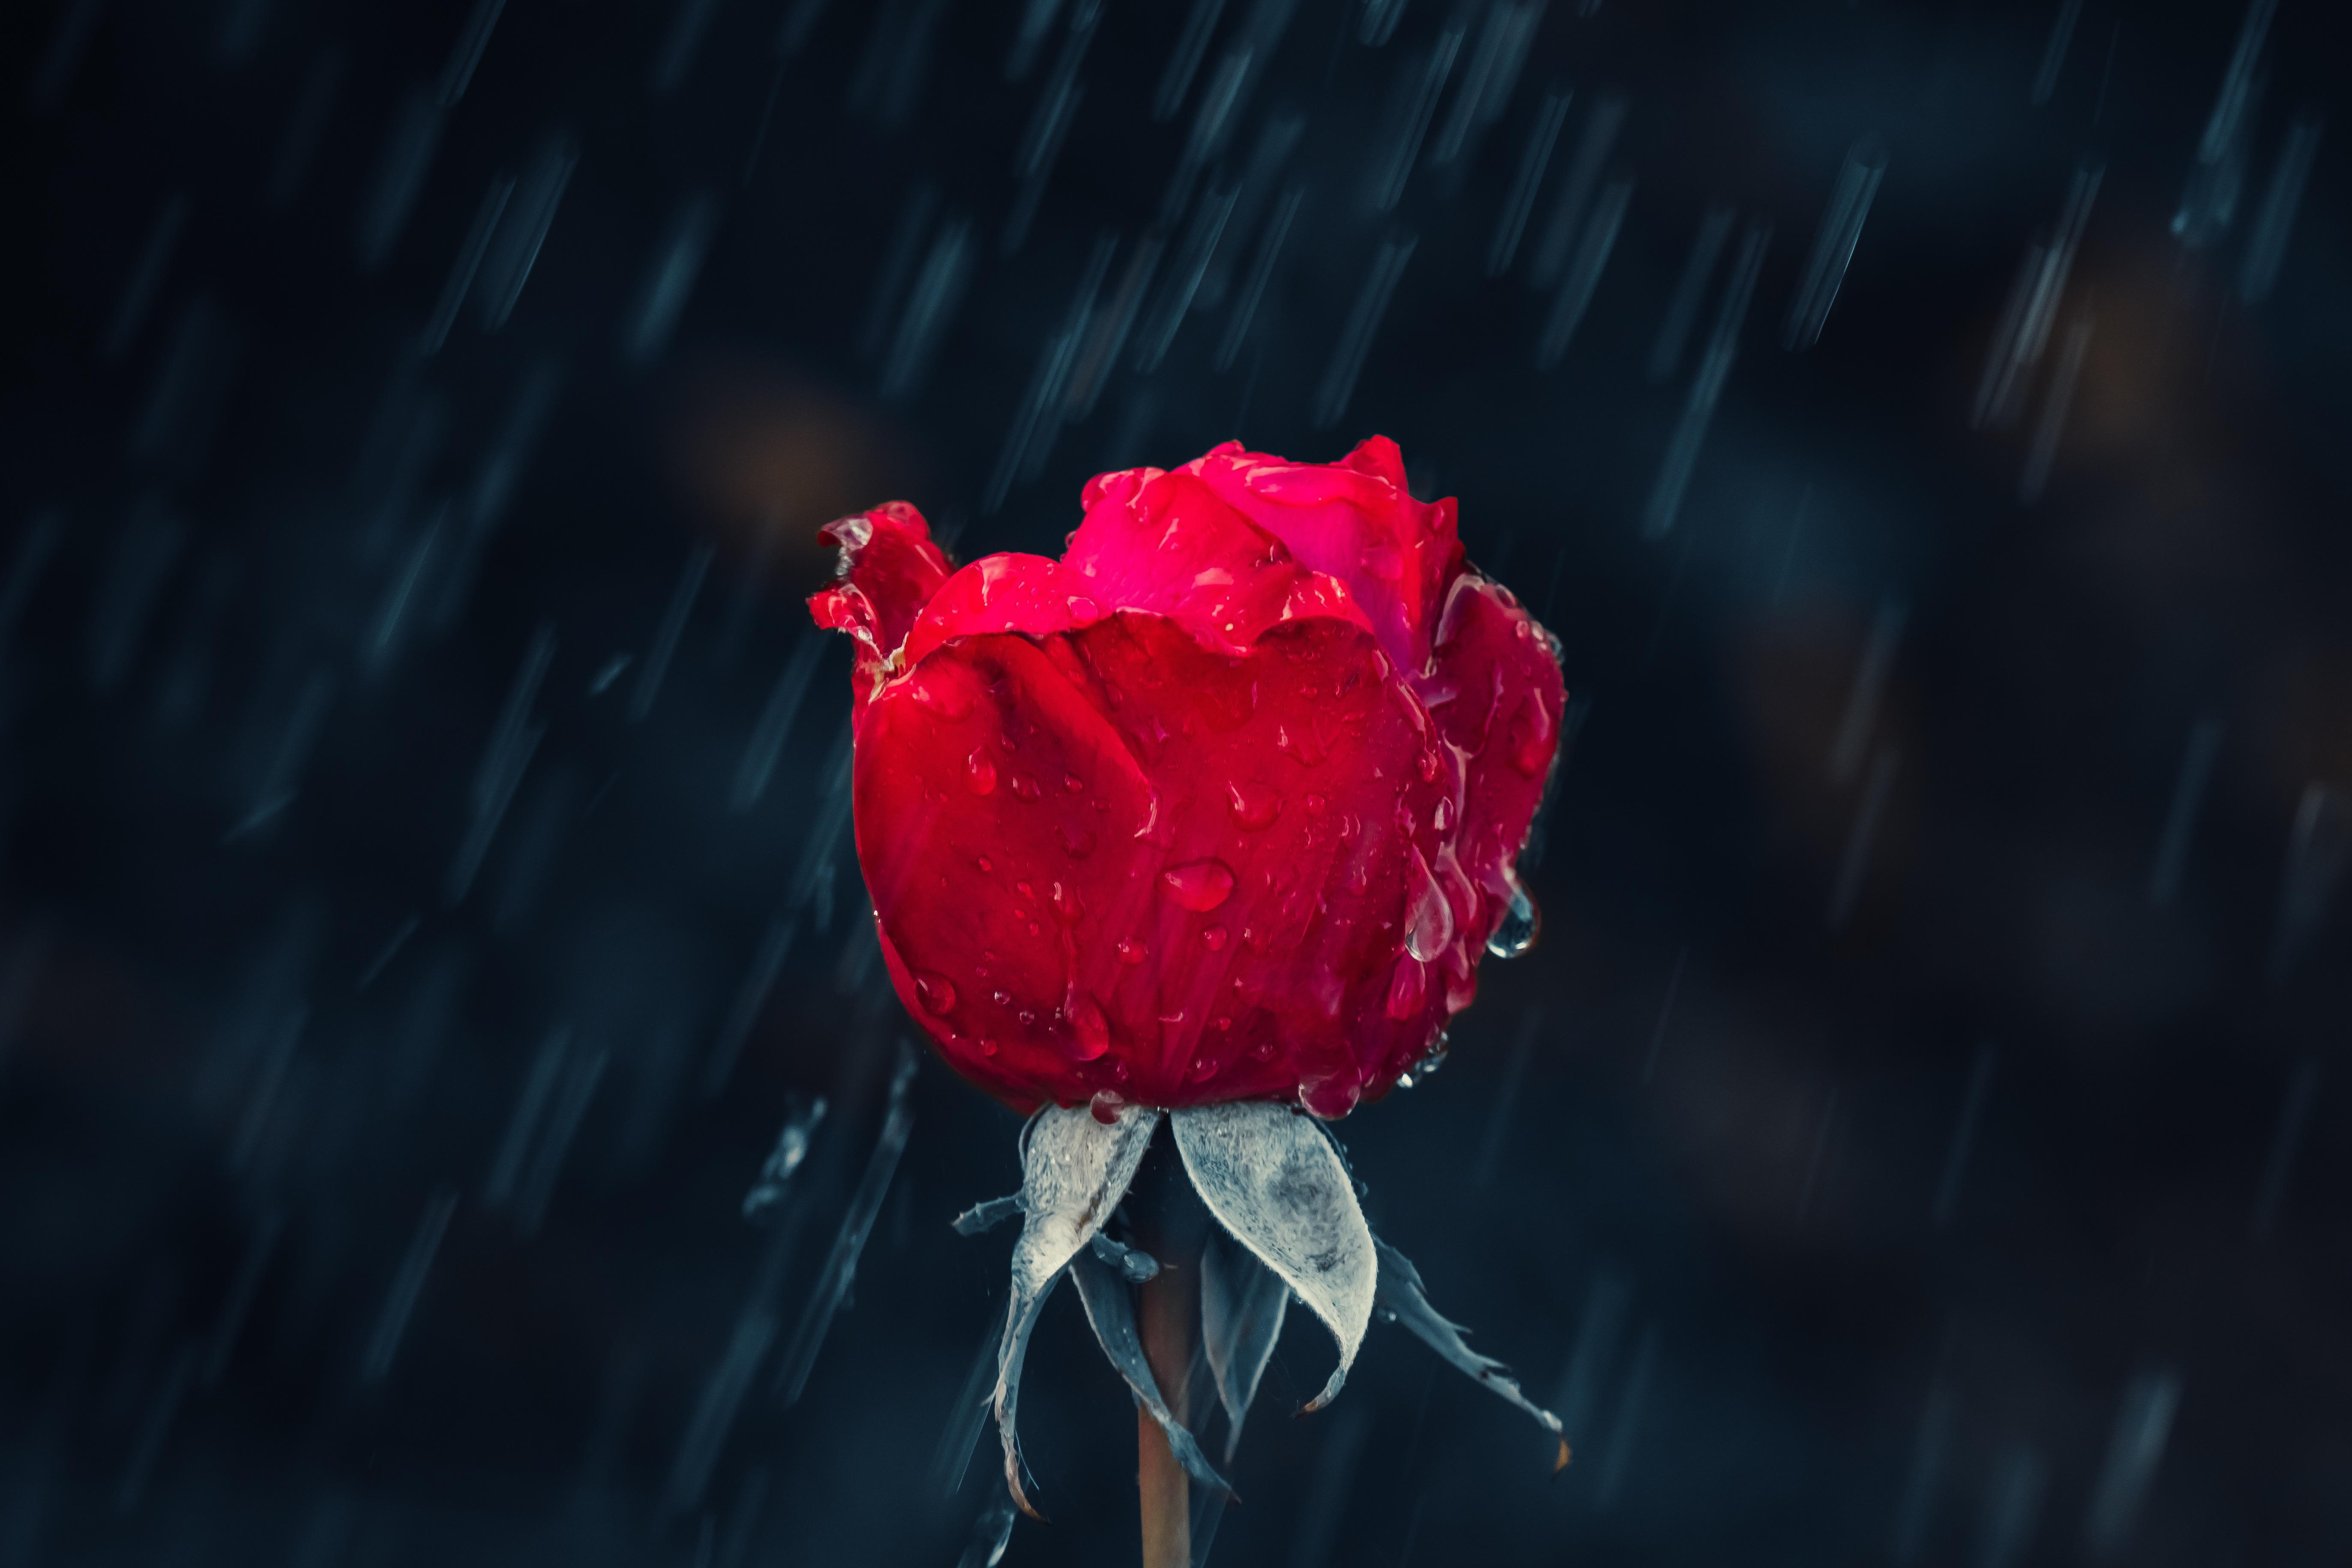 Mawar, Hujan, Tetes, Kelembaban, Merah - Red Rose In Water - HD Wallpaper 